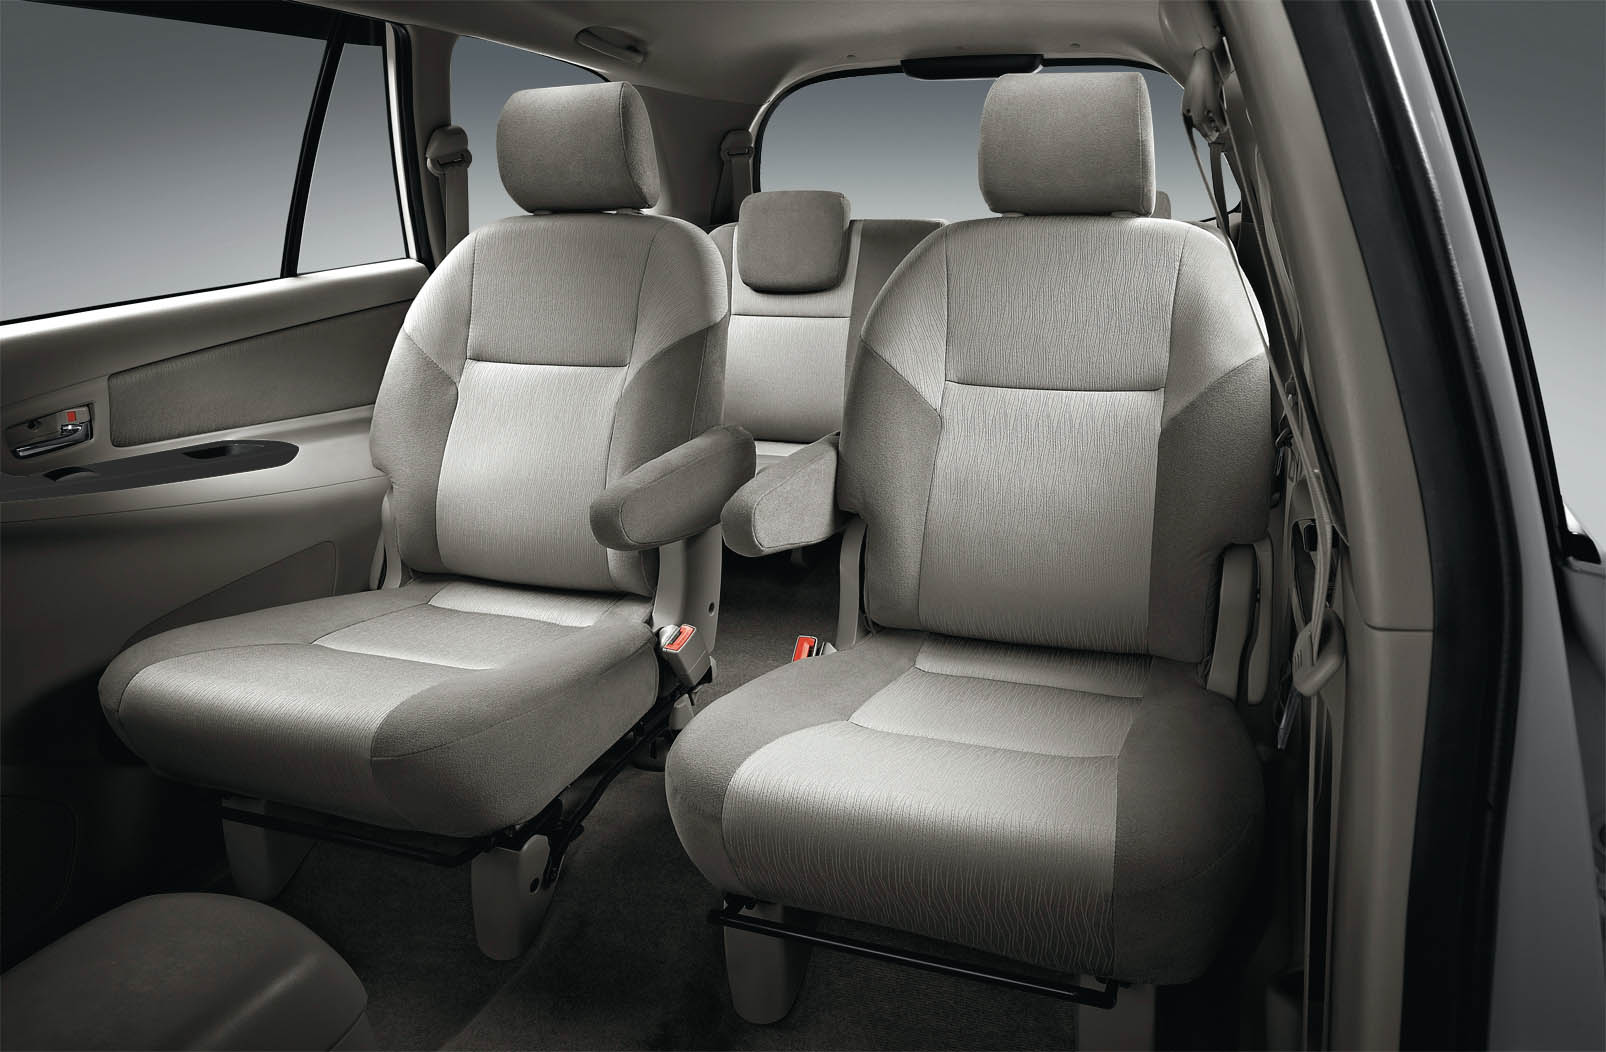 Mobil Baru, Toyota Kijang Innova 2013 Captain Seat: Nih Gambar High Resolution Foto Kijang Innova Facelift 2013